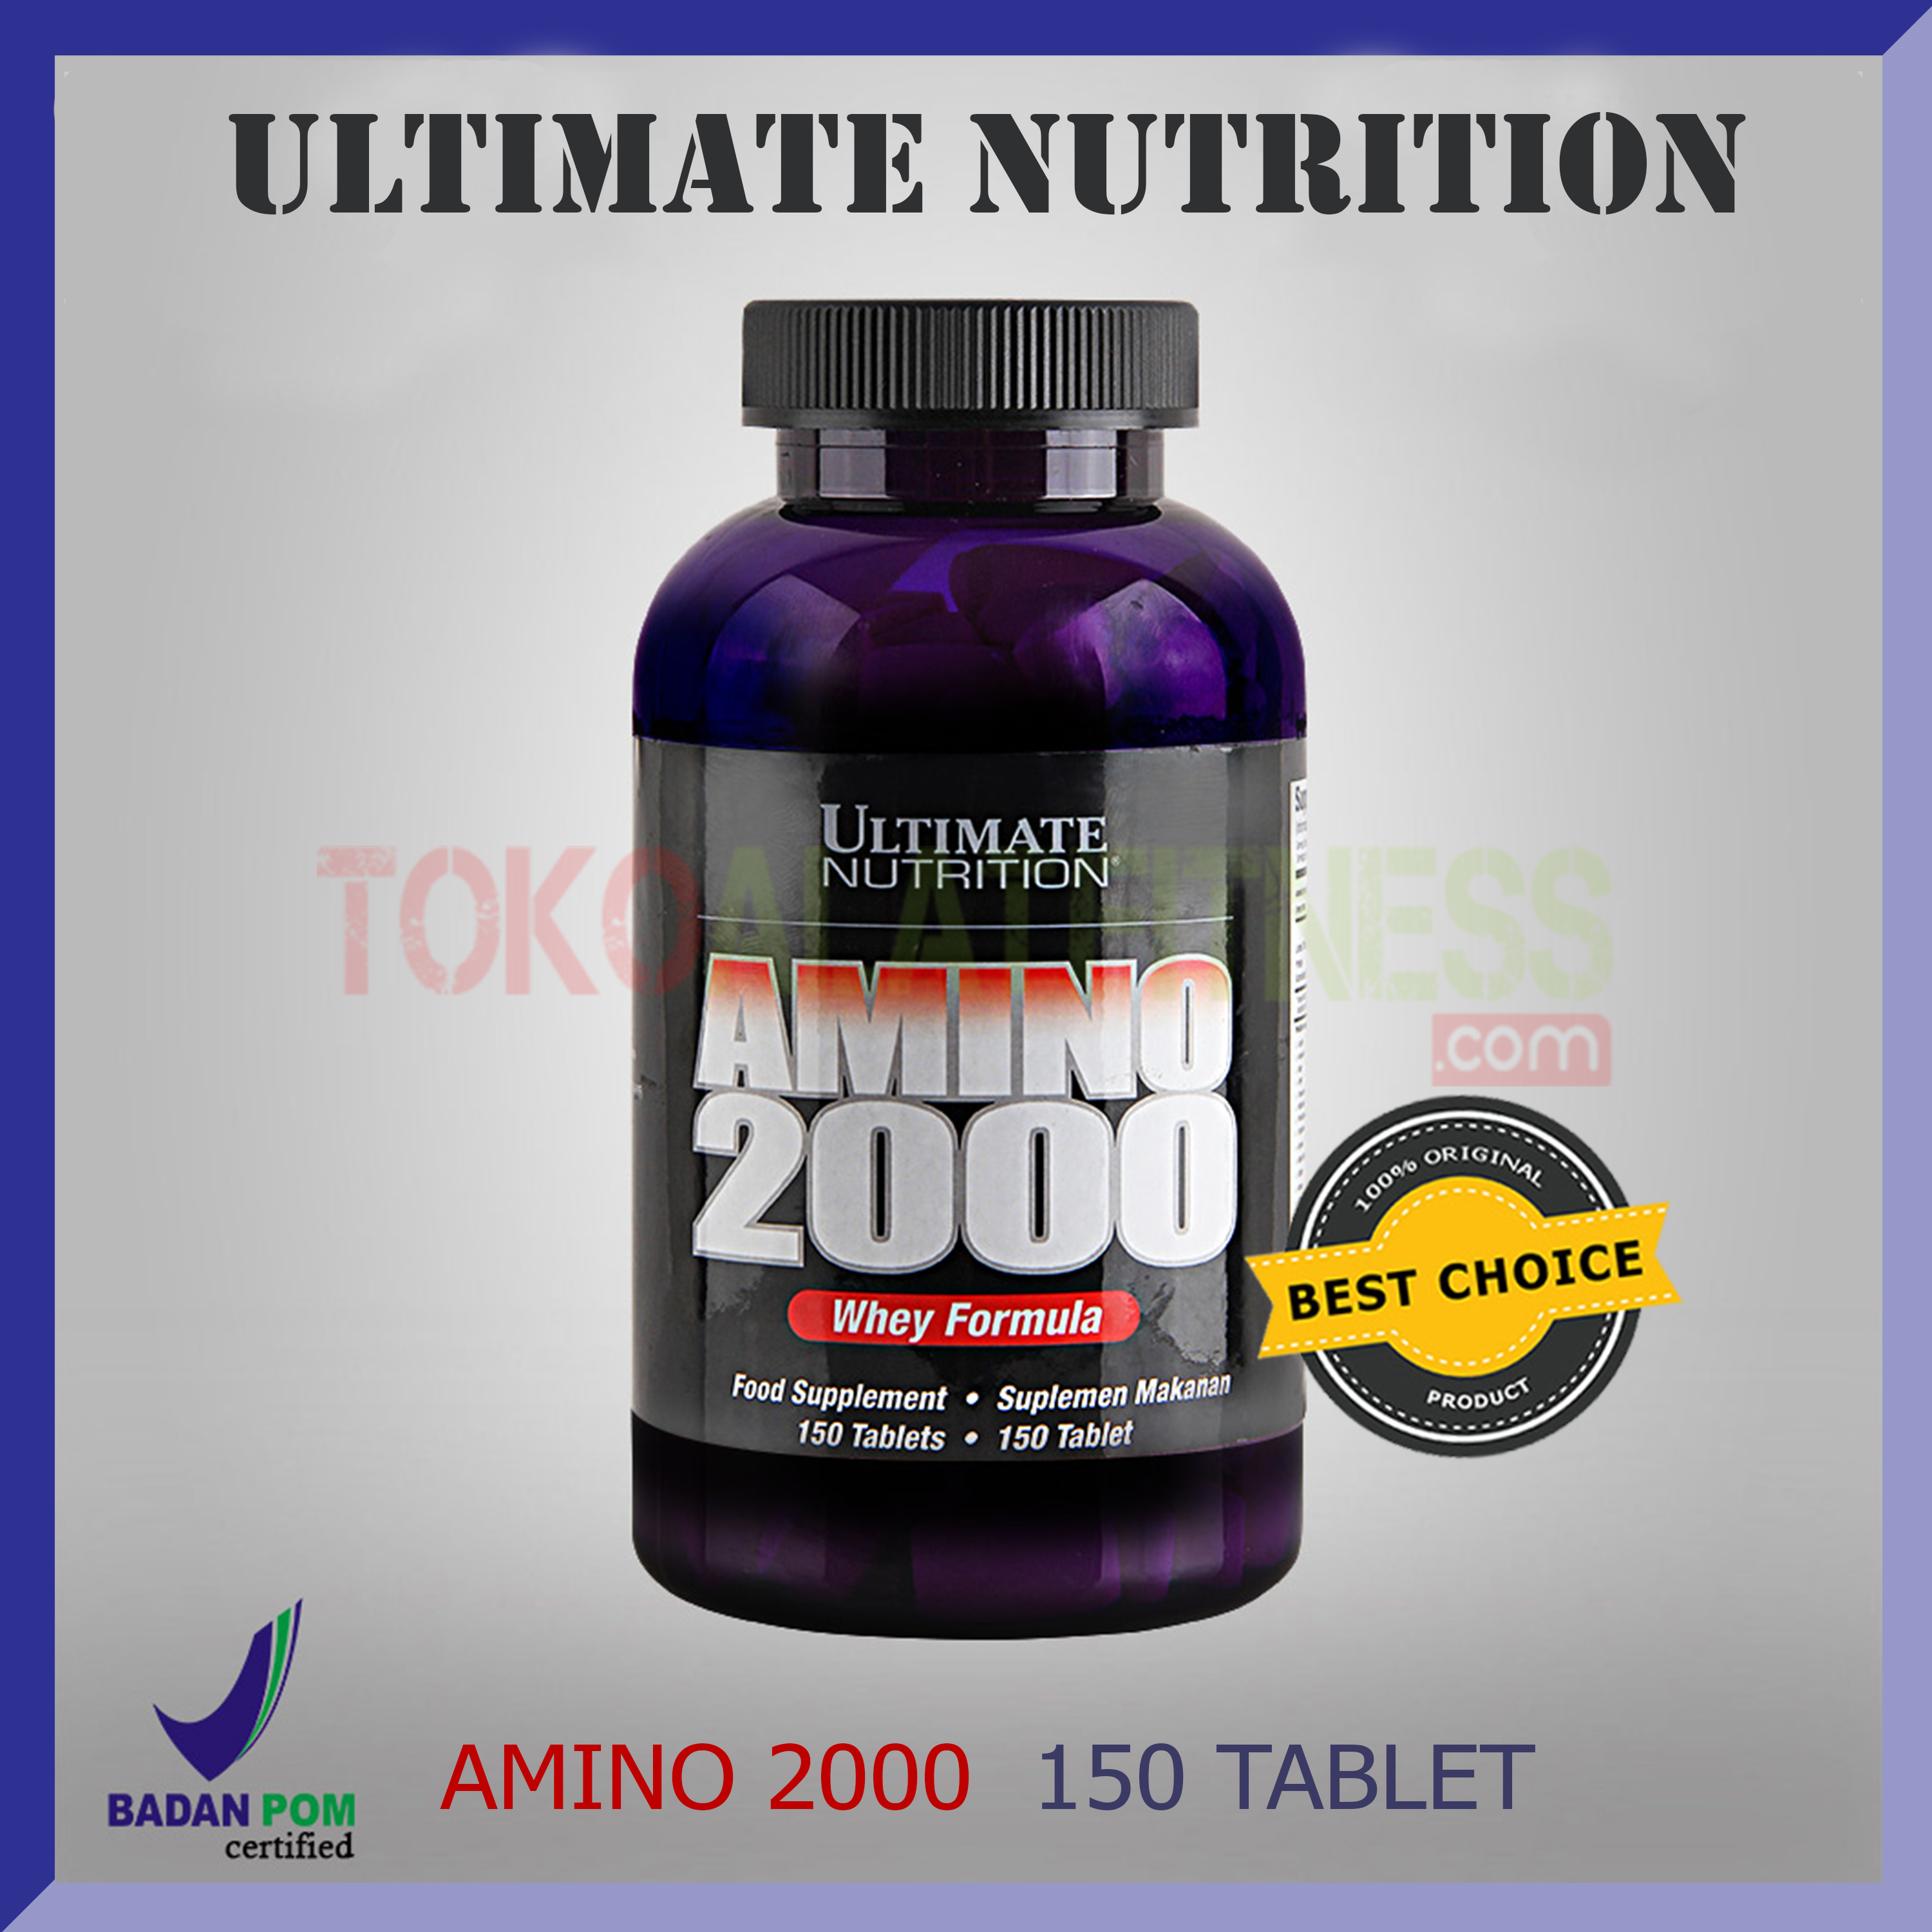 ULTIMATE NUTRITION ASAM AMINO 2000 1500 Tabs - Amino 2000, 150 Tabs